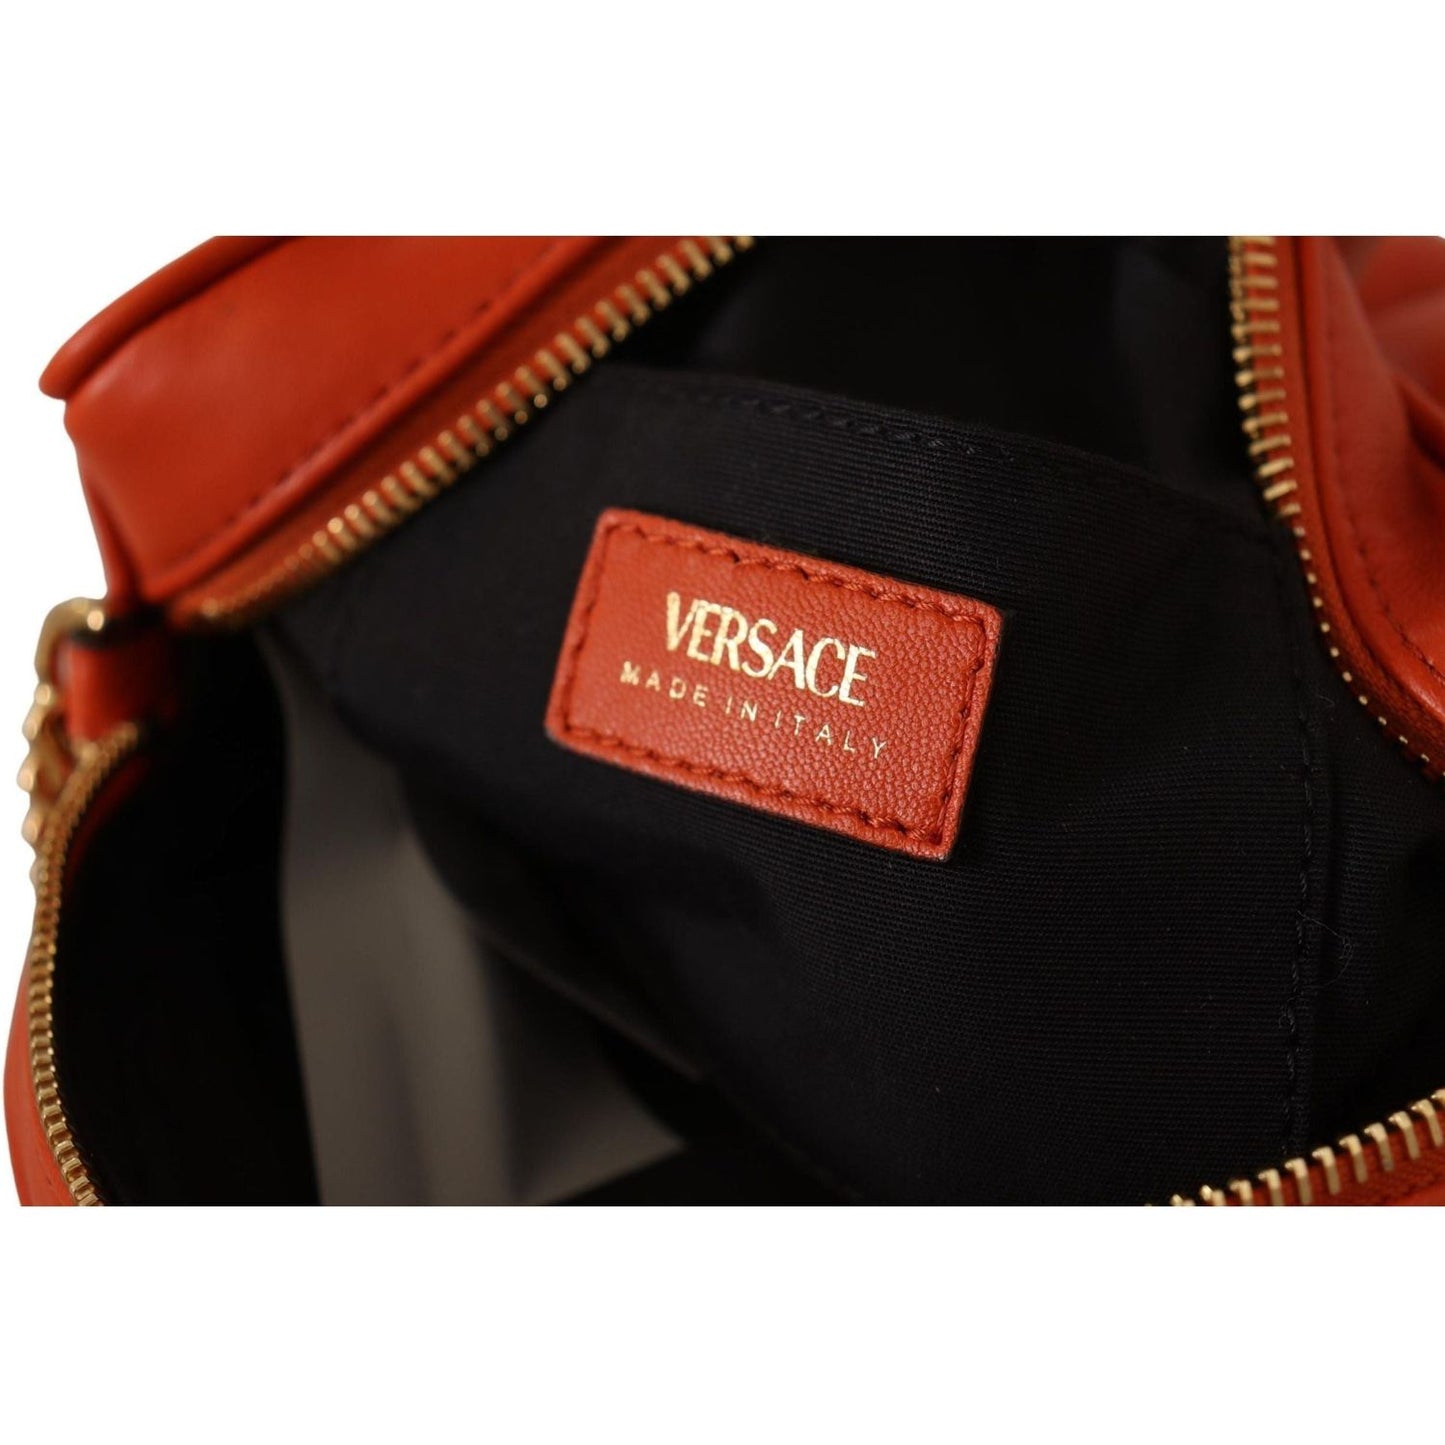 Versace Elegant Round Nappa Leather Crossbody Bag red-nappa-leather-medusa-round-crossbody-bag Crossbody Bag IMG_8874-scaled-e11f0224-947.jpg